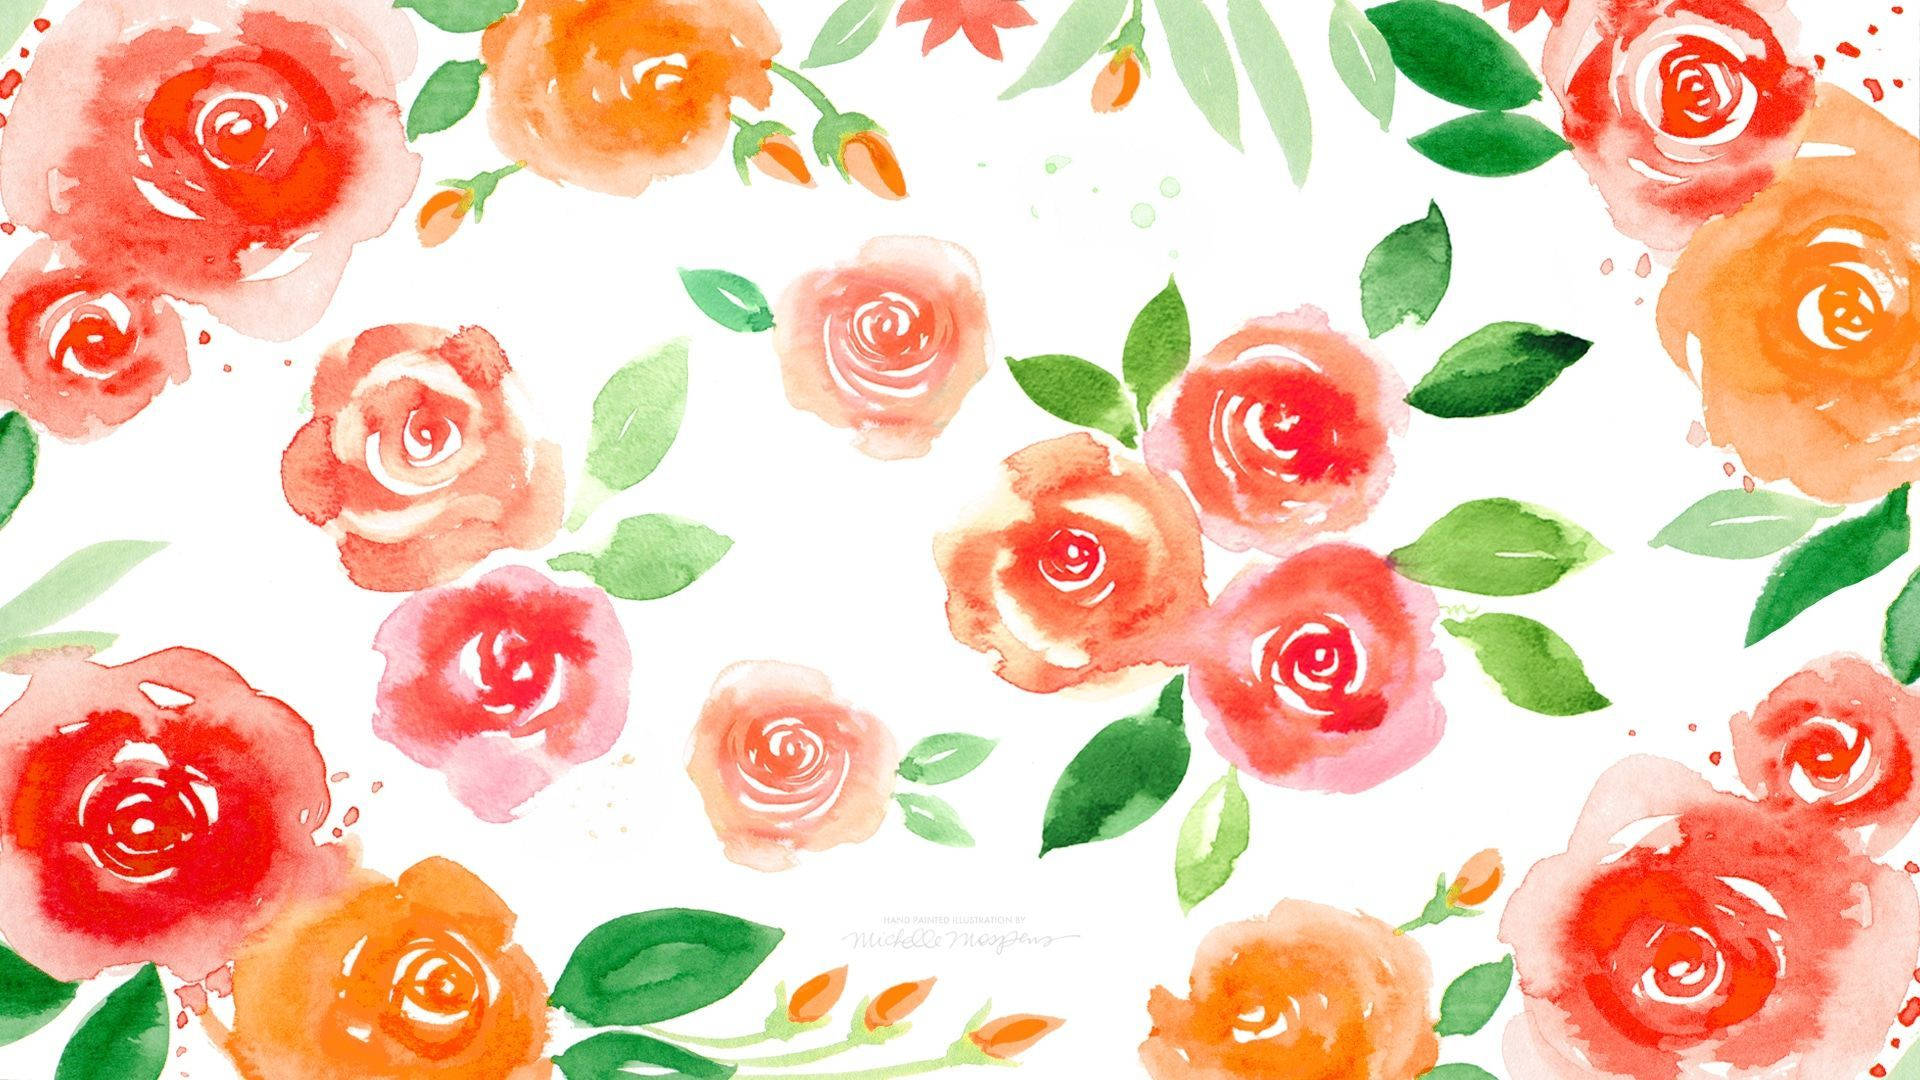 Warm Colors On Floral Desktop Painting Background